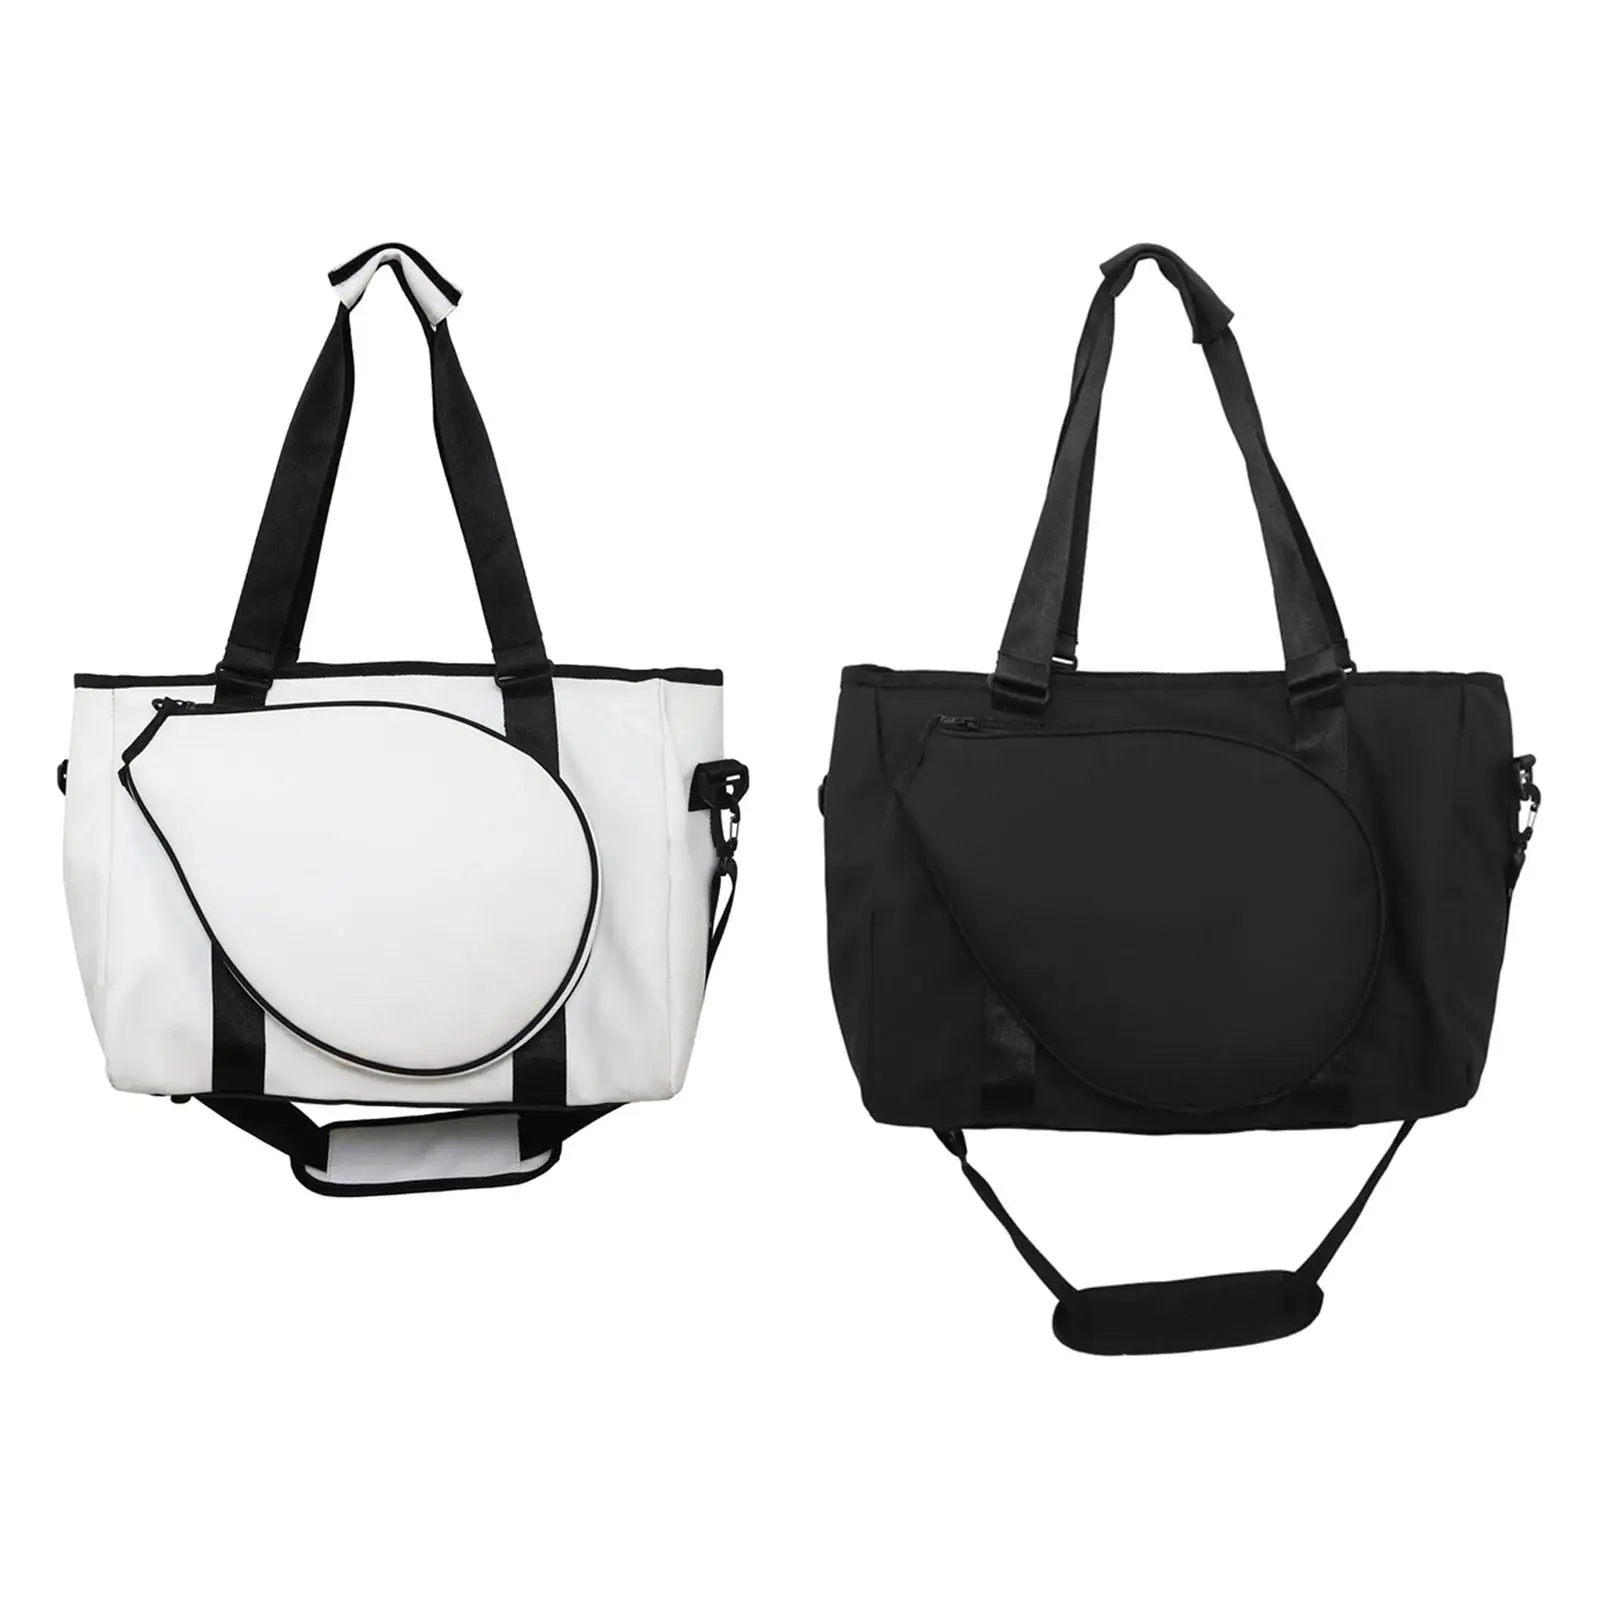 Tennis Shoulder Bag with Removable Shoulder Strap Sport Bag for Women for Badminton Racquet Fitness Outdoor Clothes Equipment